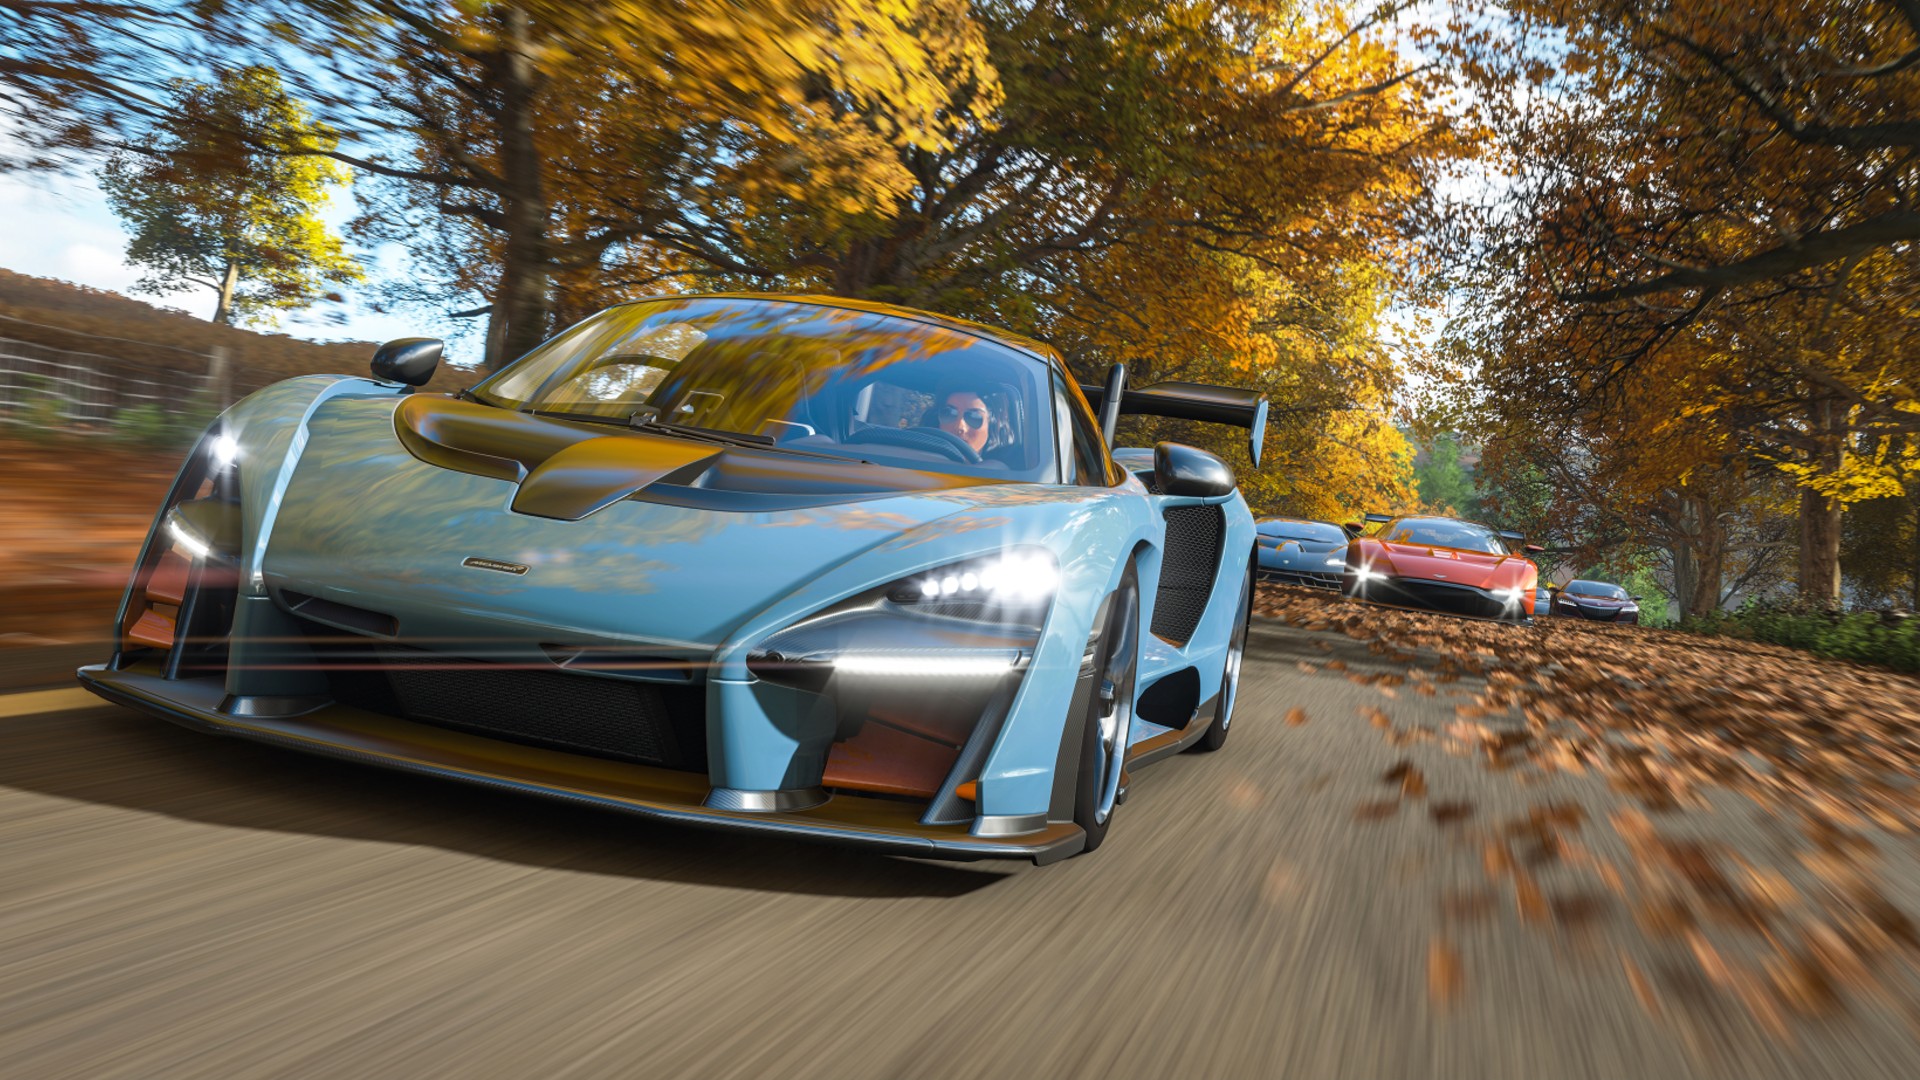 Best open-world games: driving a light-blue sports car down an avenue in Forza Horizon 4.